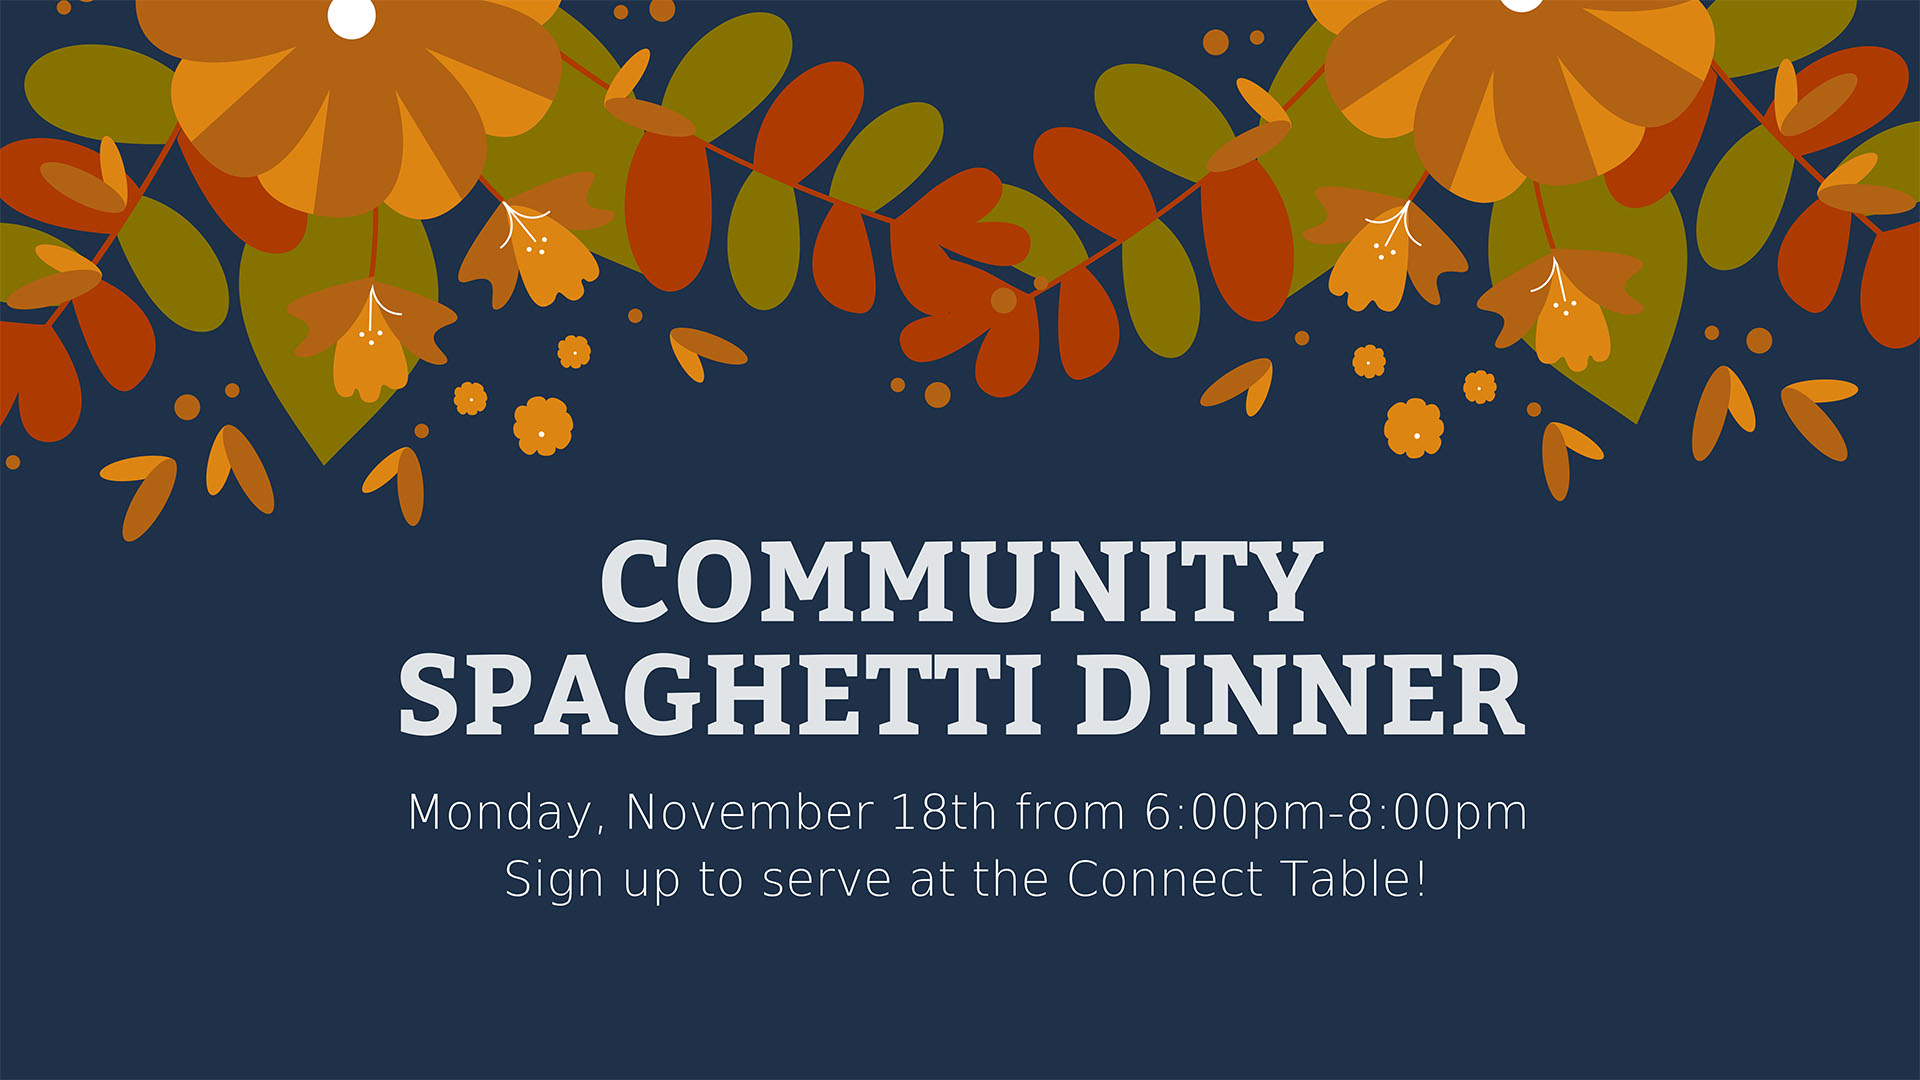 community spaghetti dinner image